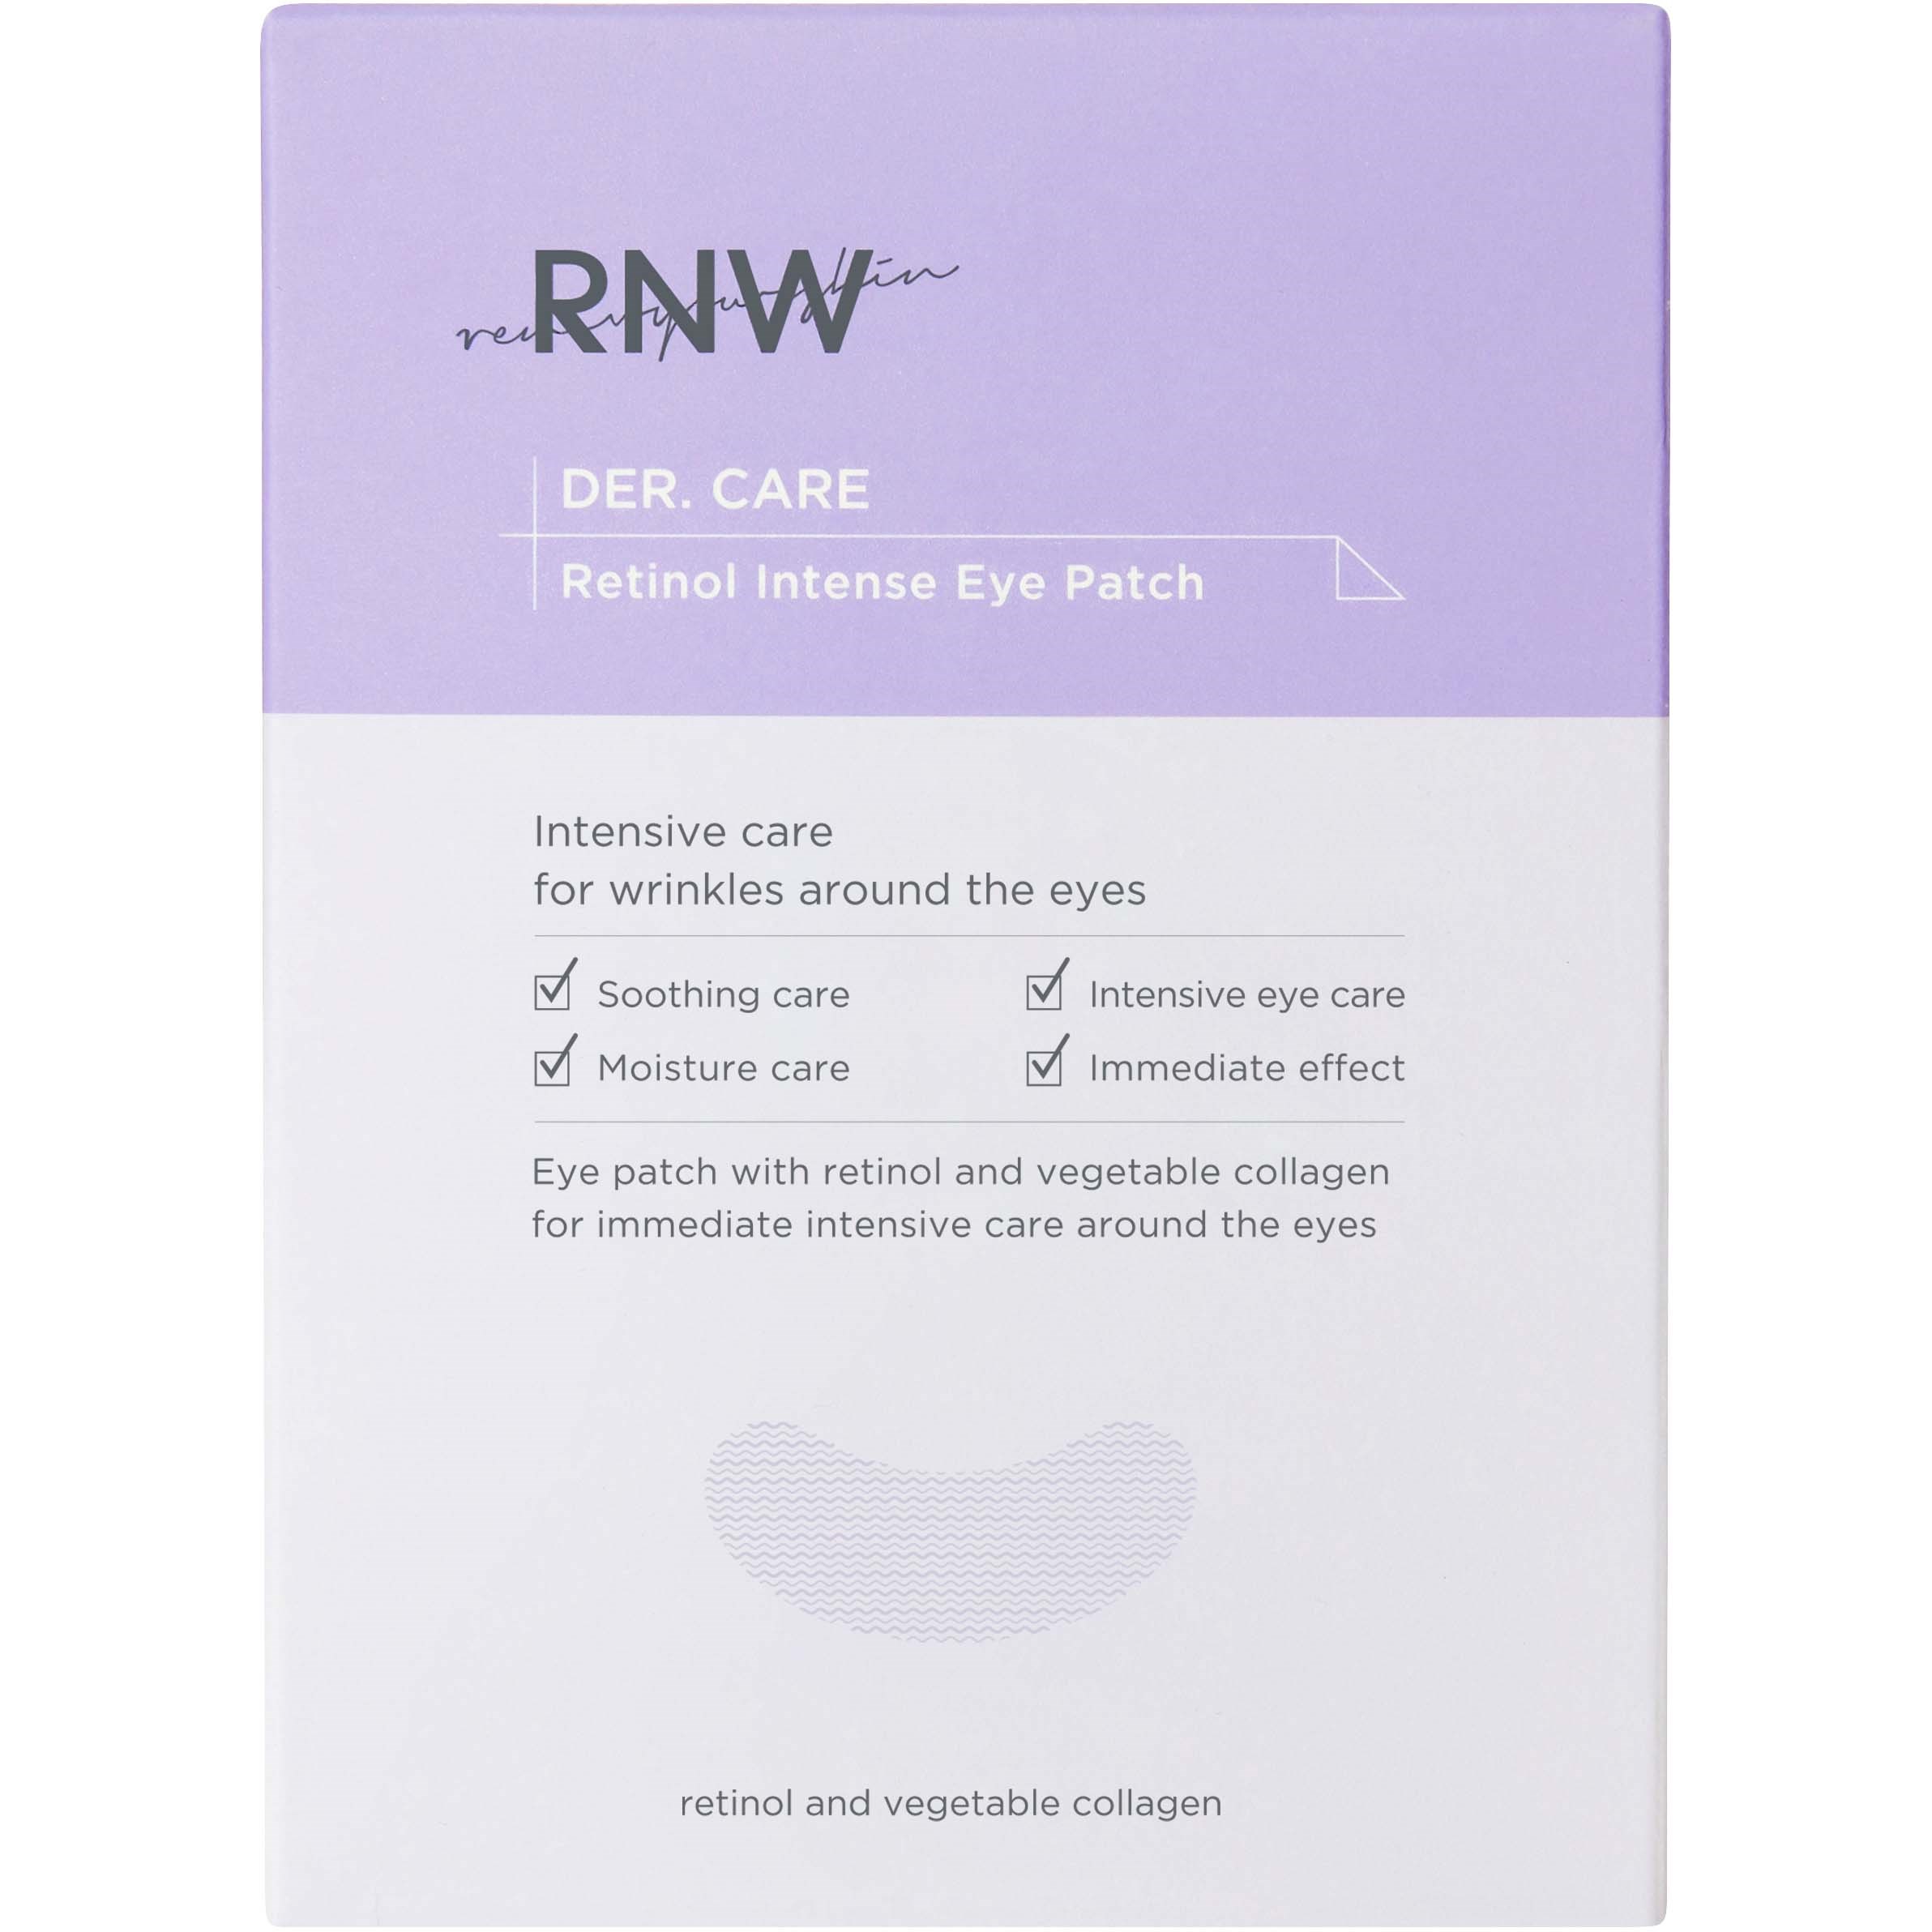 RNW Der. Care Retinol Intense Eye Patch